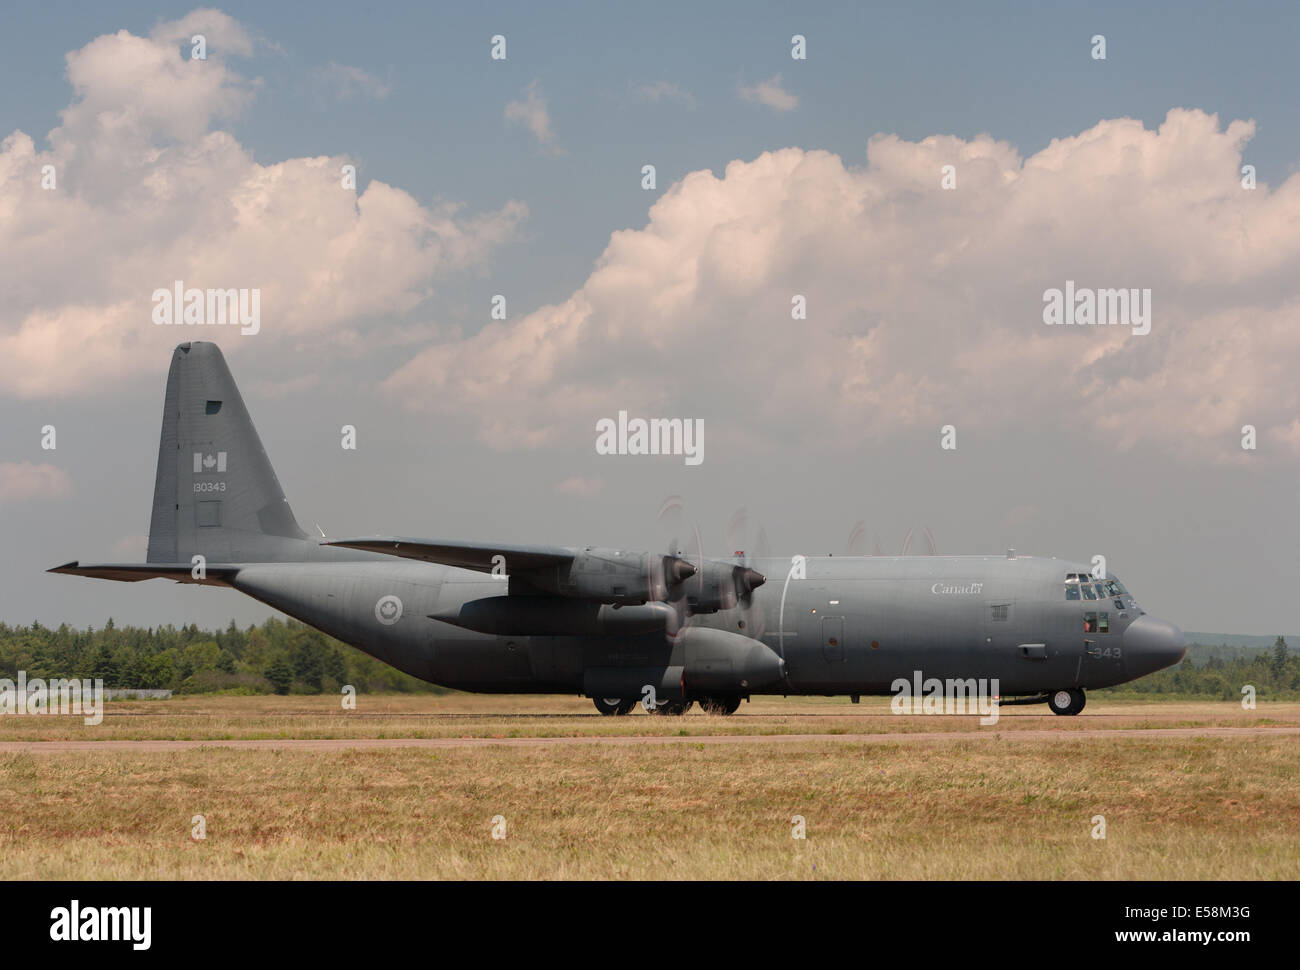 DEBERT, CANADA - luglio 7, 2013: Royal Canadian Air Force C-130 Hercules. Il C-130 Hercules è un motore di quattro aerei militari. Foto Stock